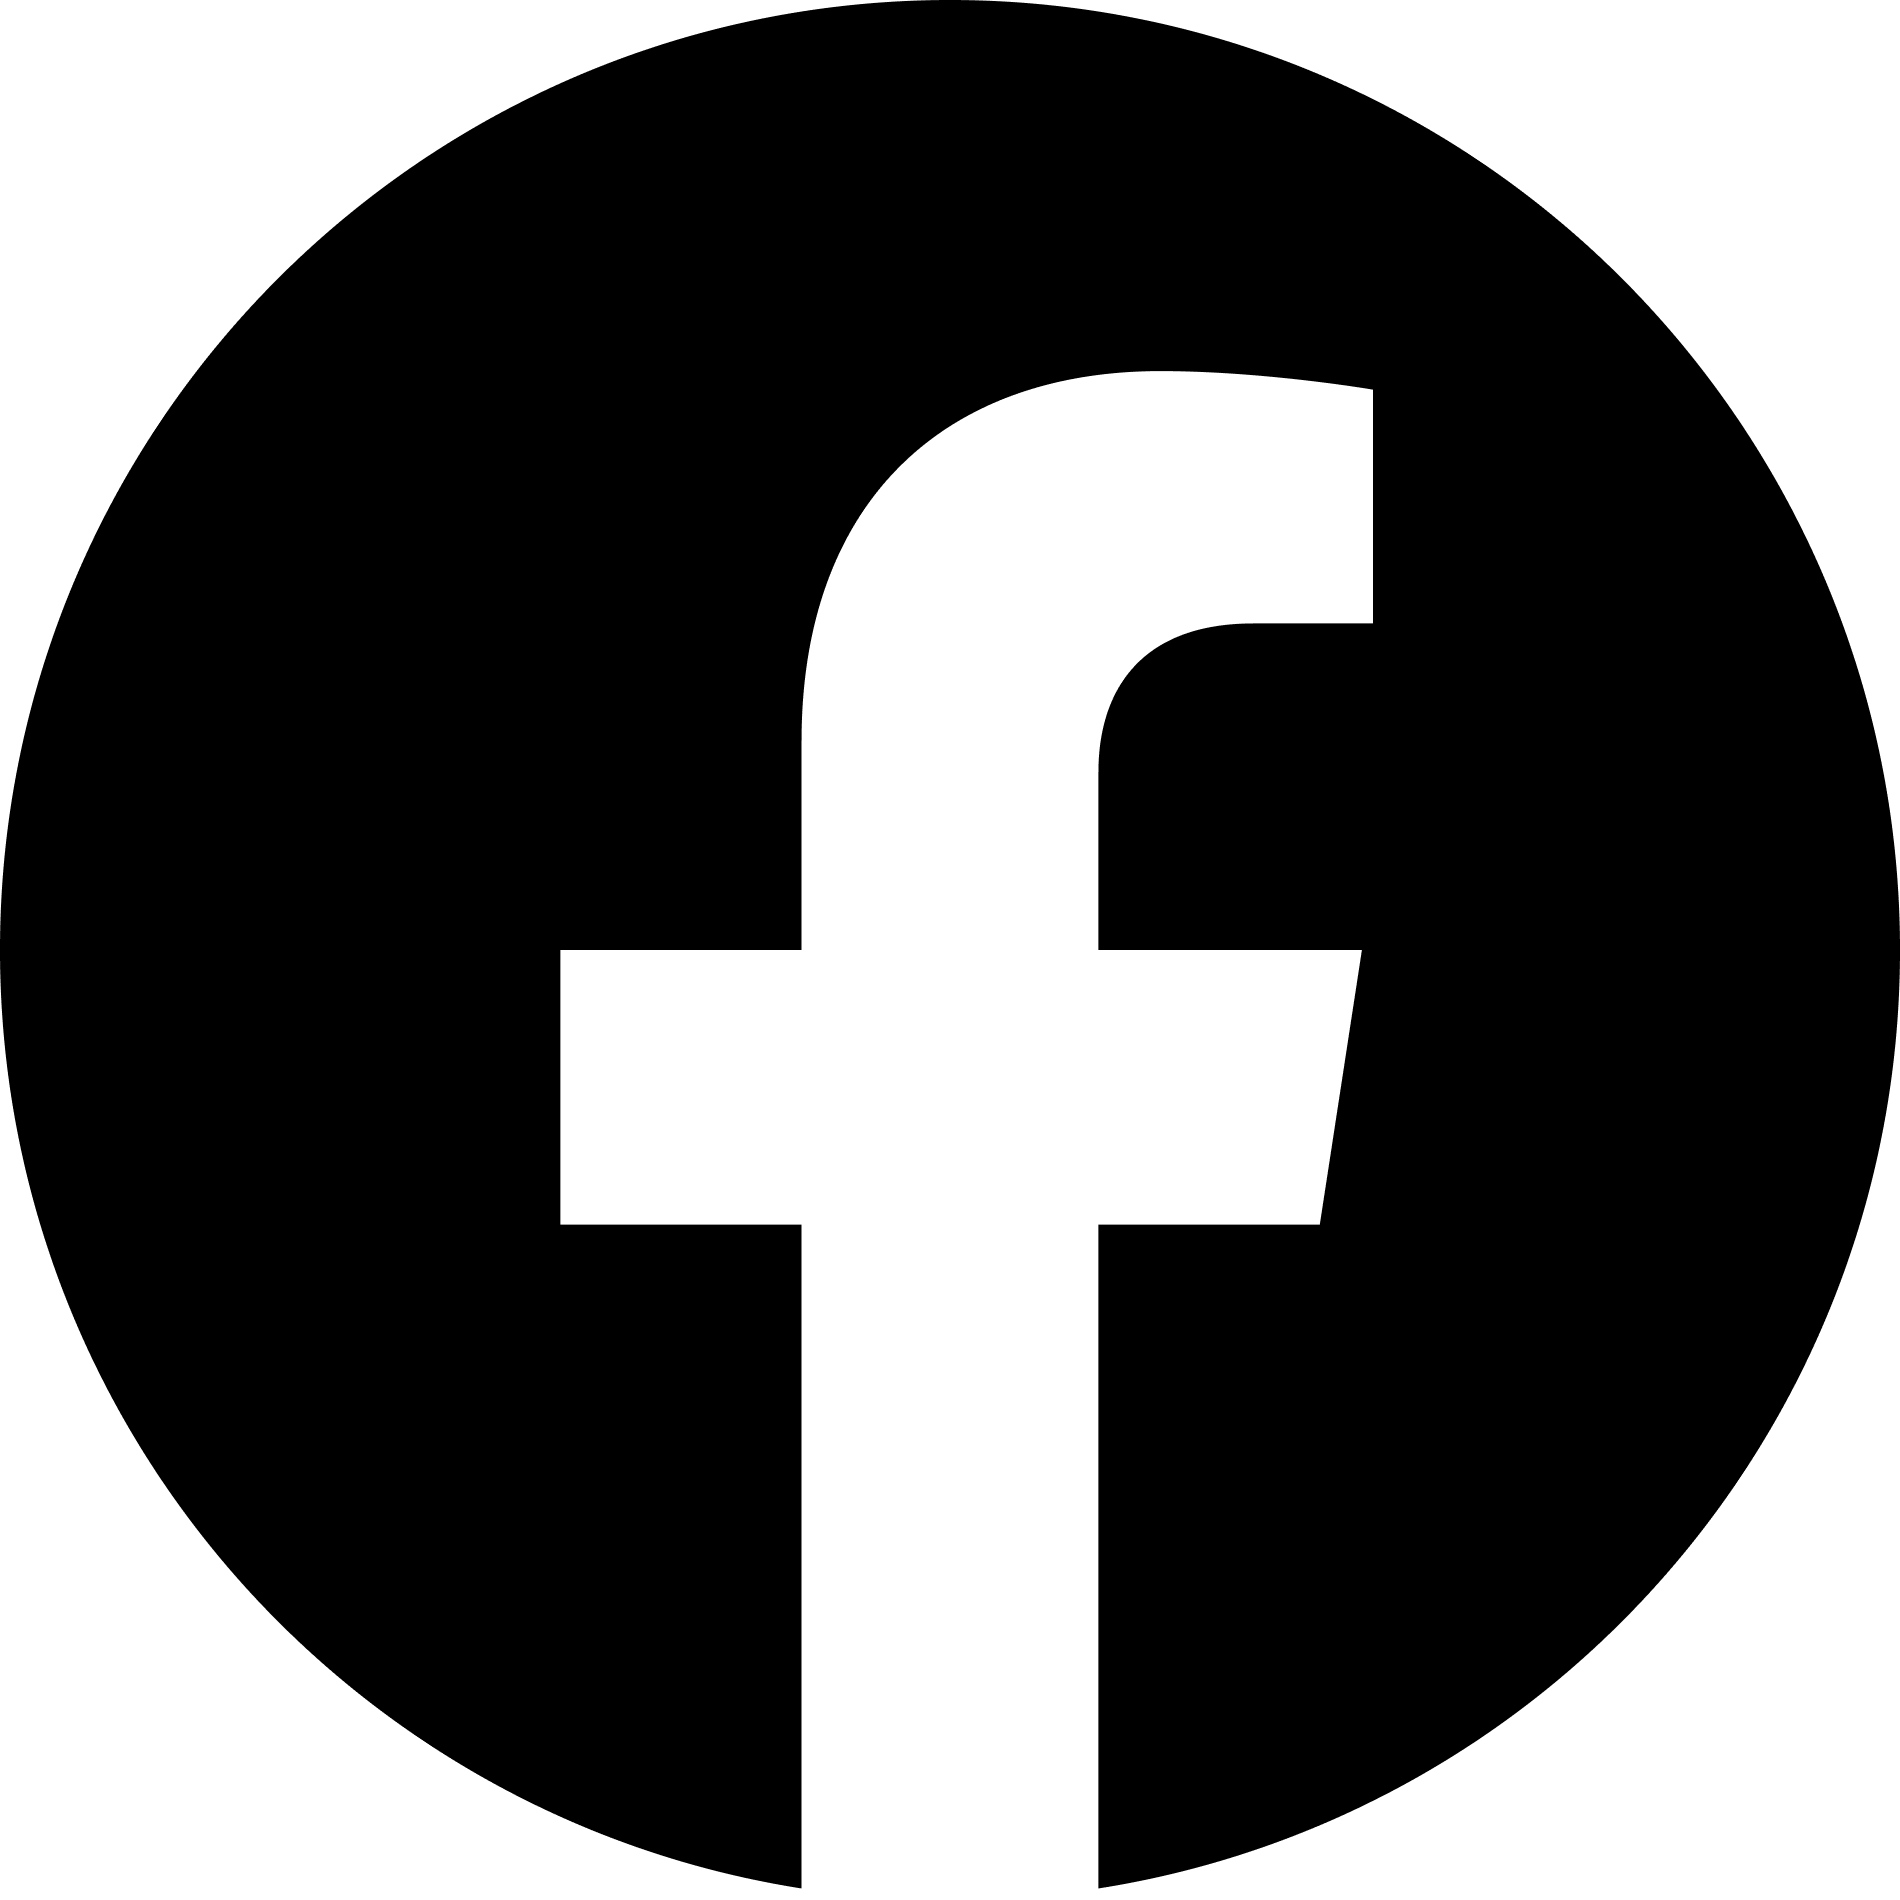 facebook logo black and white 1900